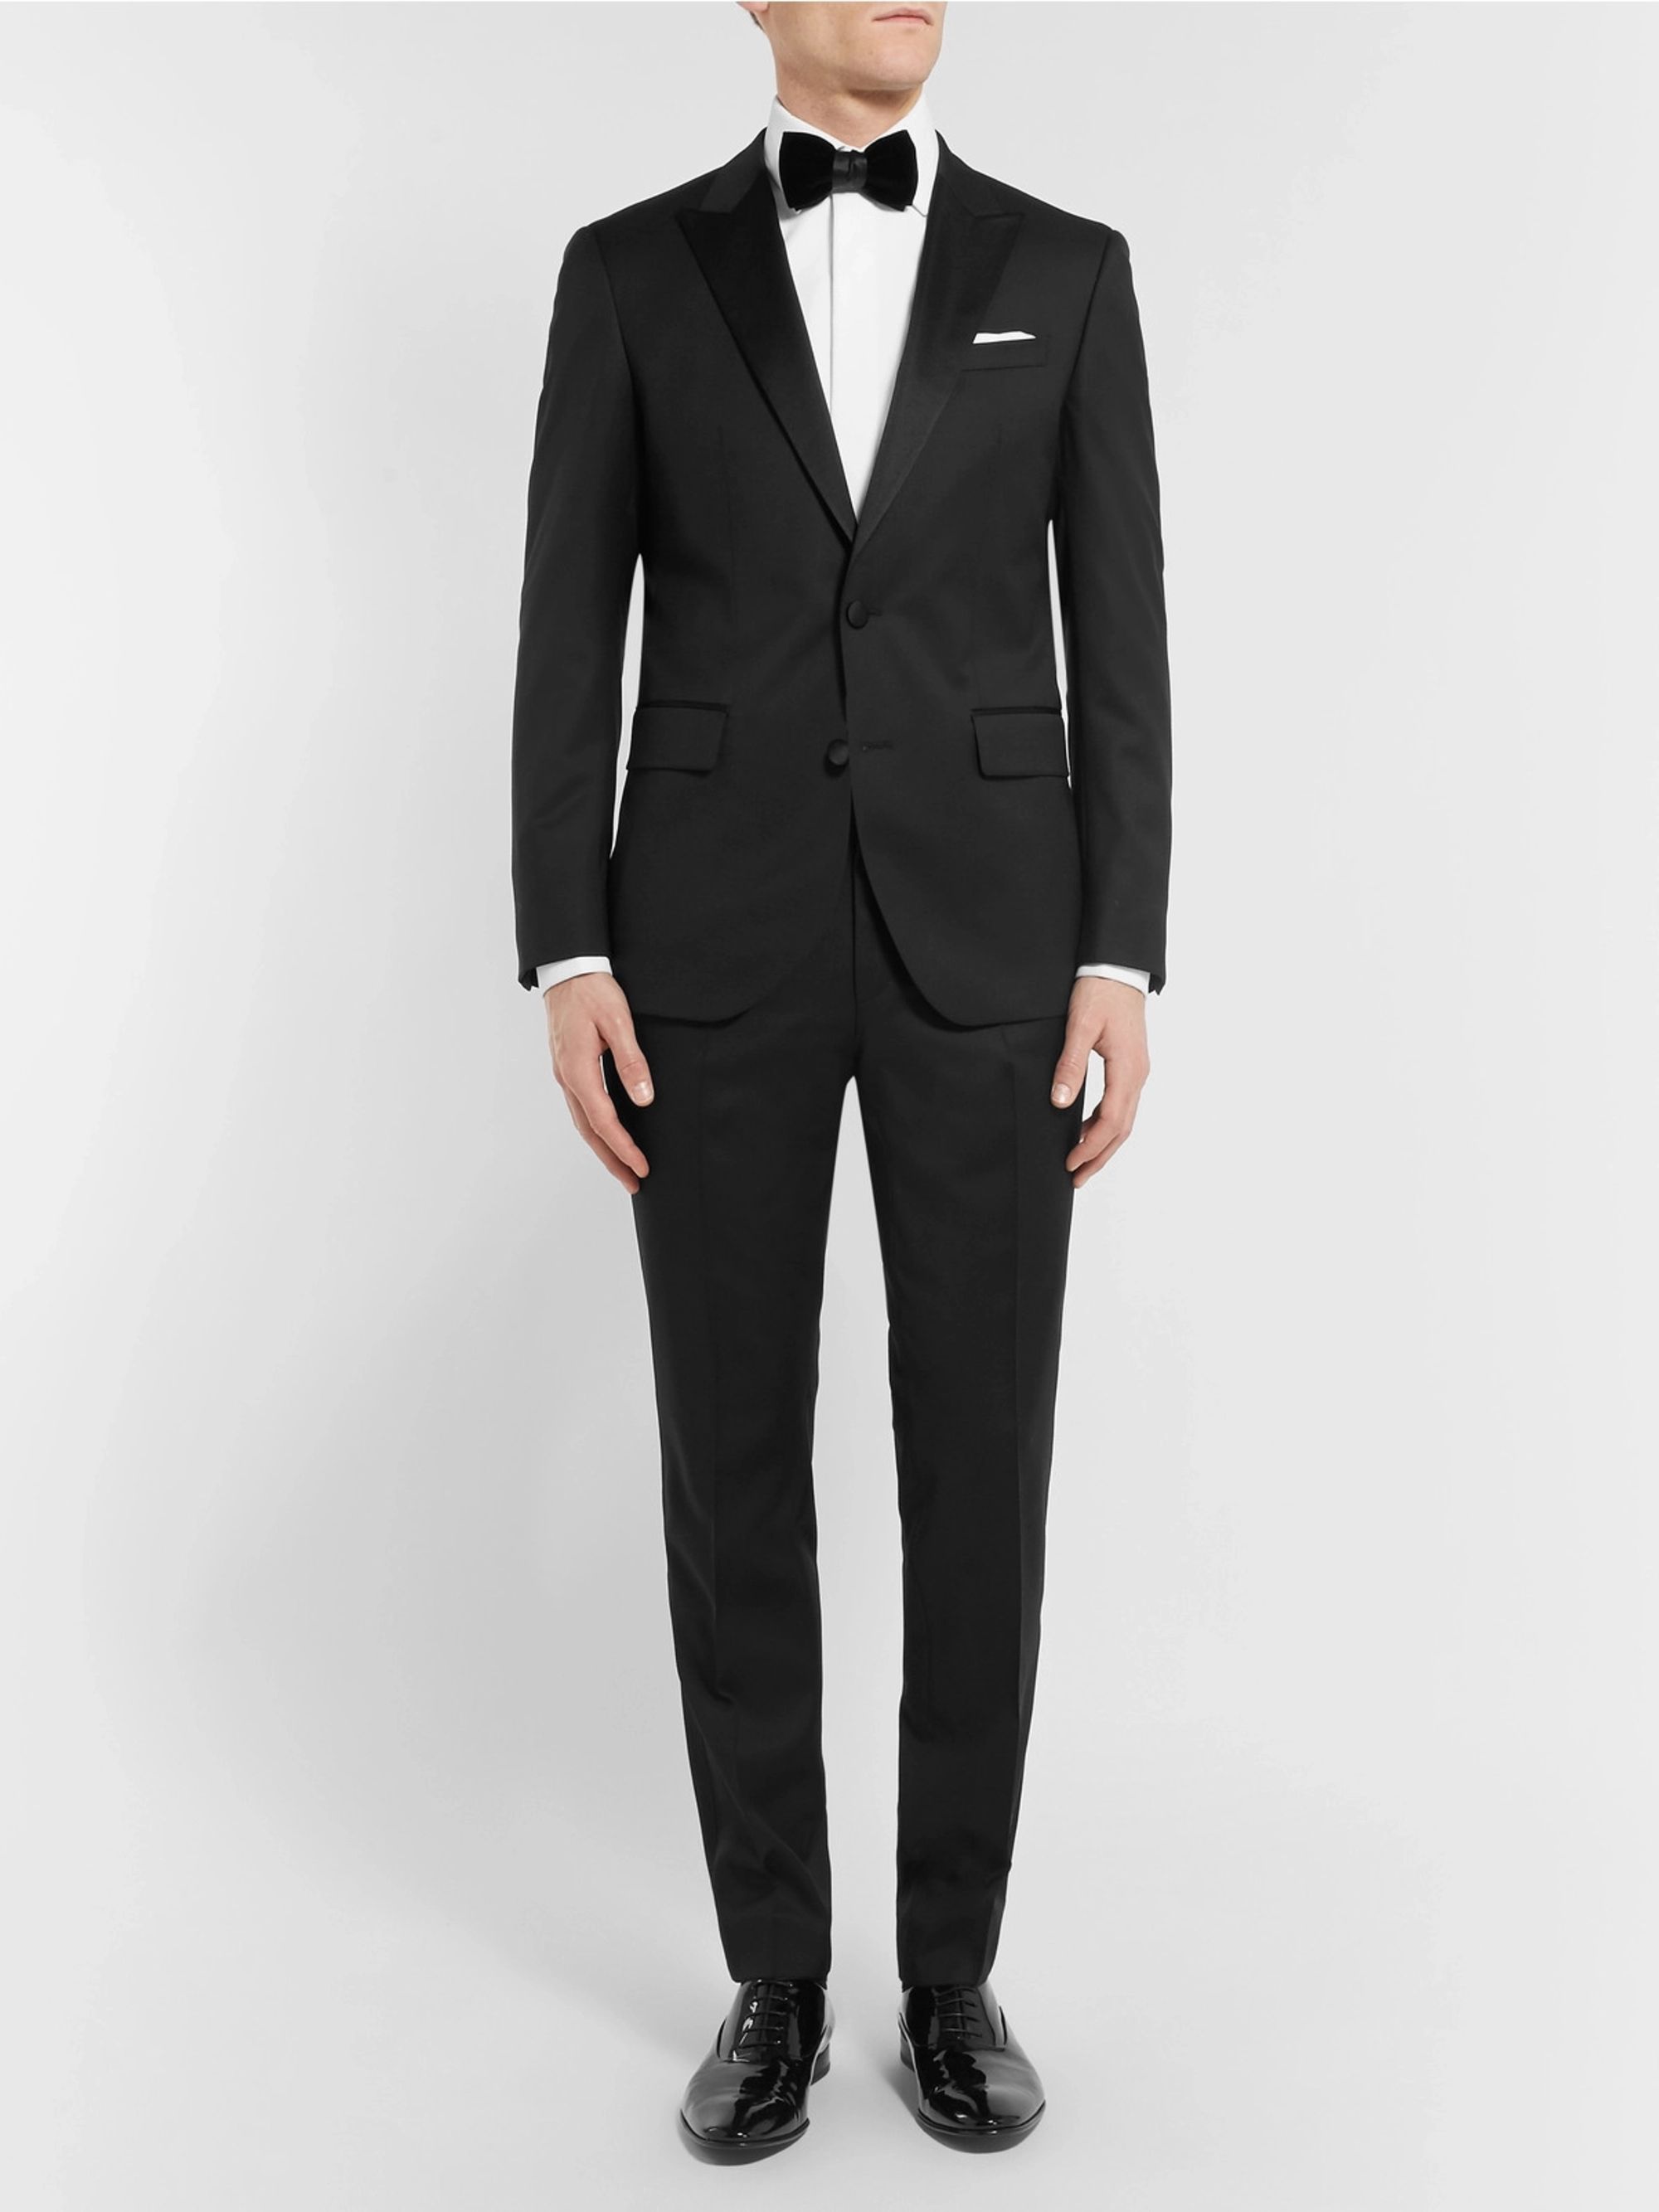 boss tuxedo suit Online shopping has 